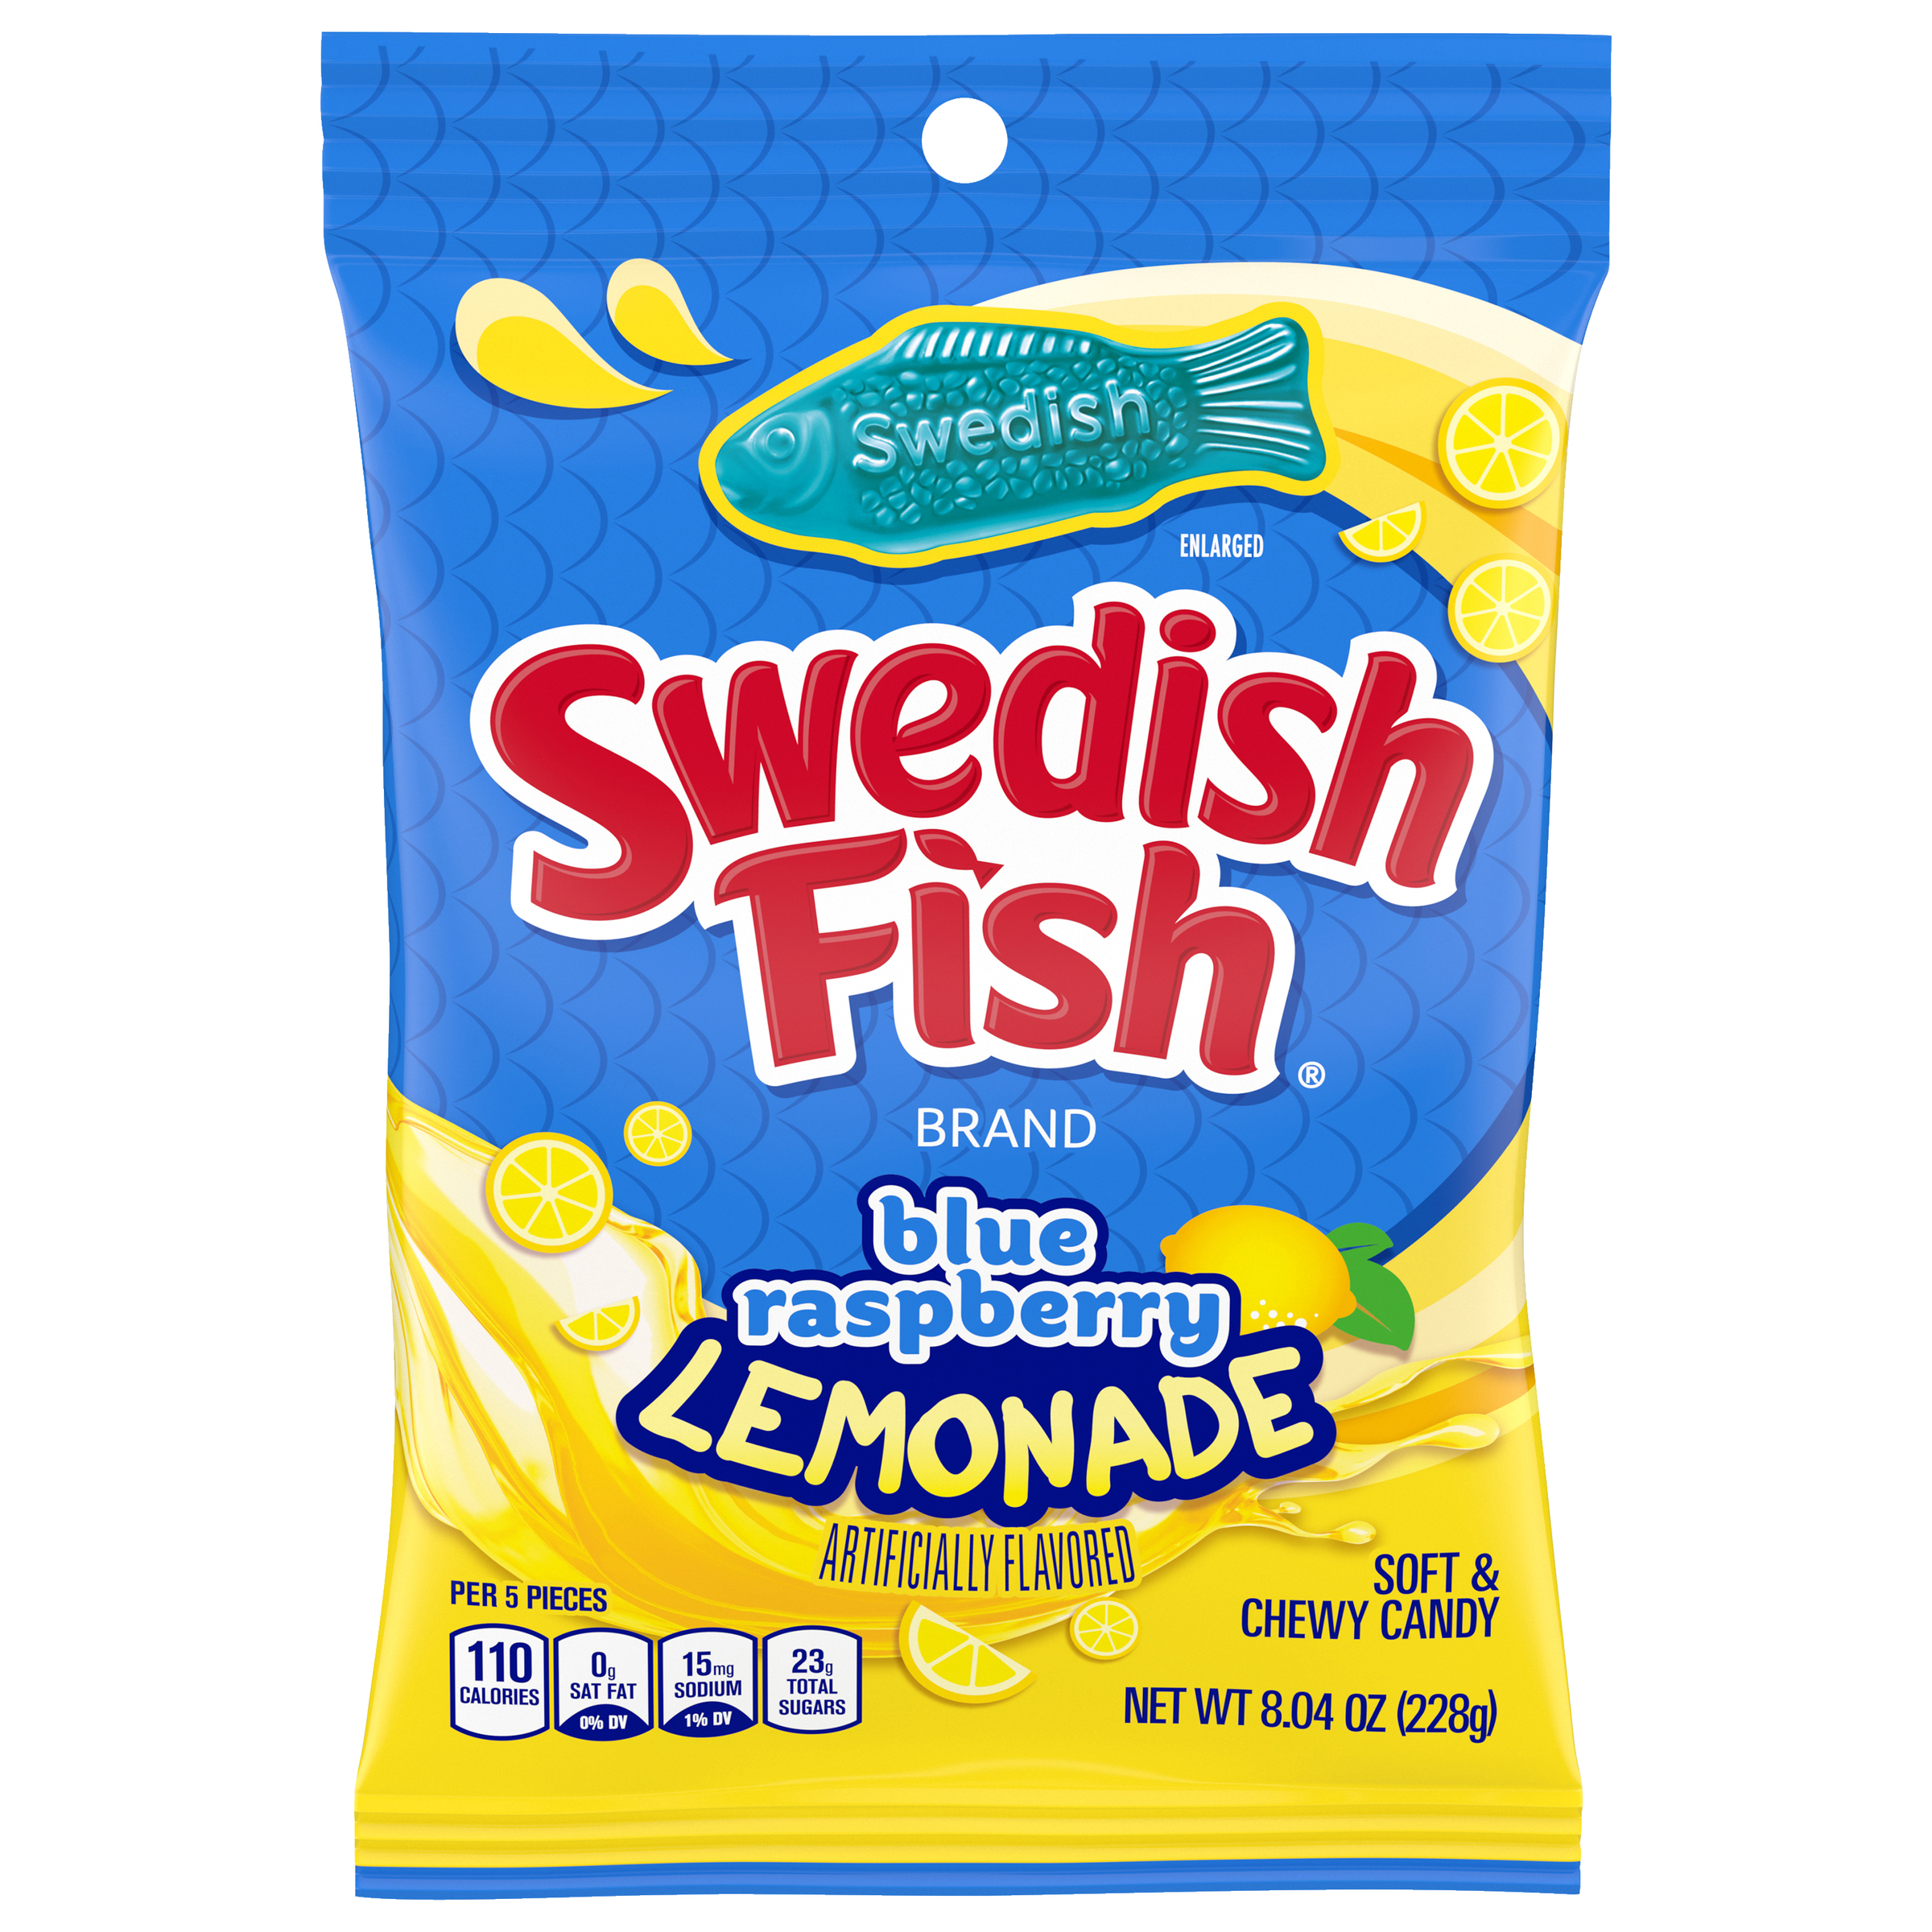 SWEDISH FISH Blue Raspberry Lemonade Soft & Chewy Candy, 8.04 oz Bag